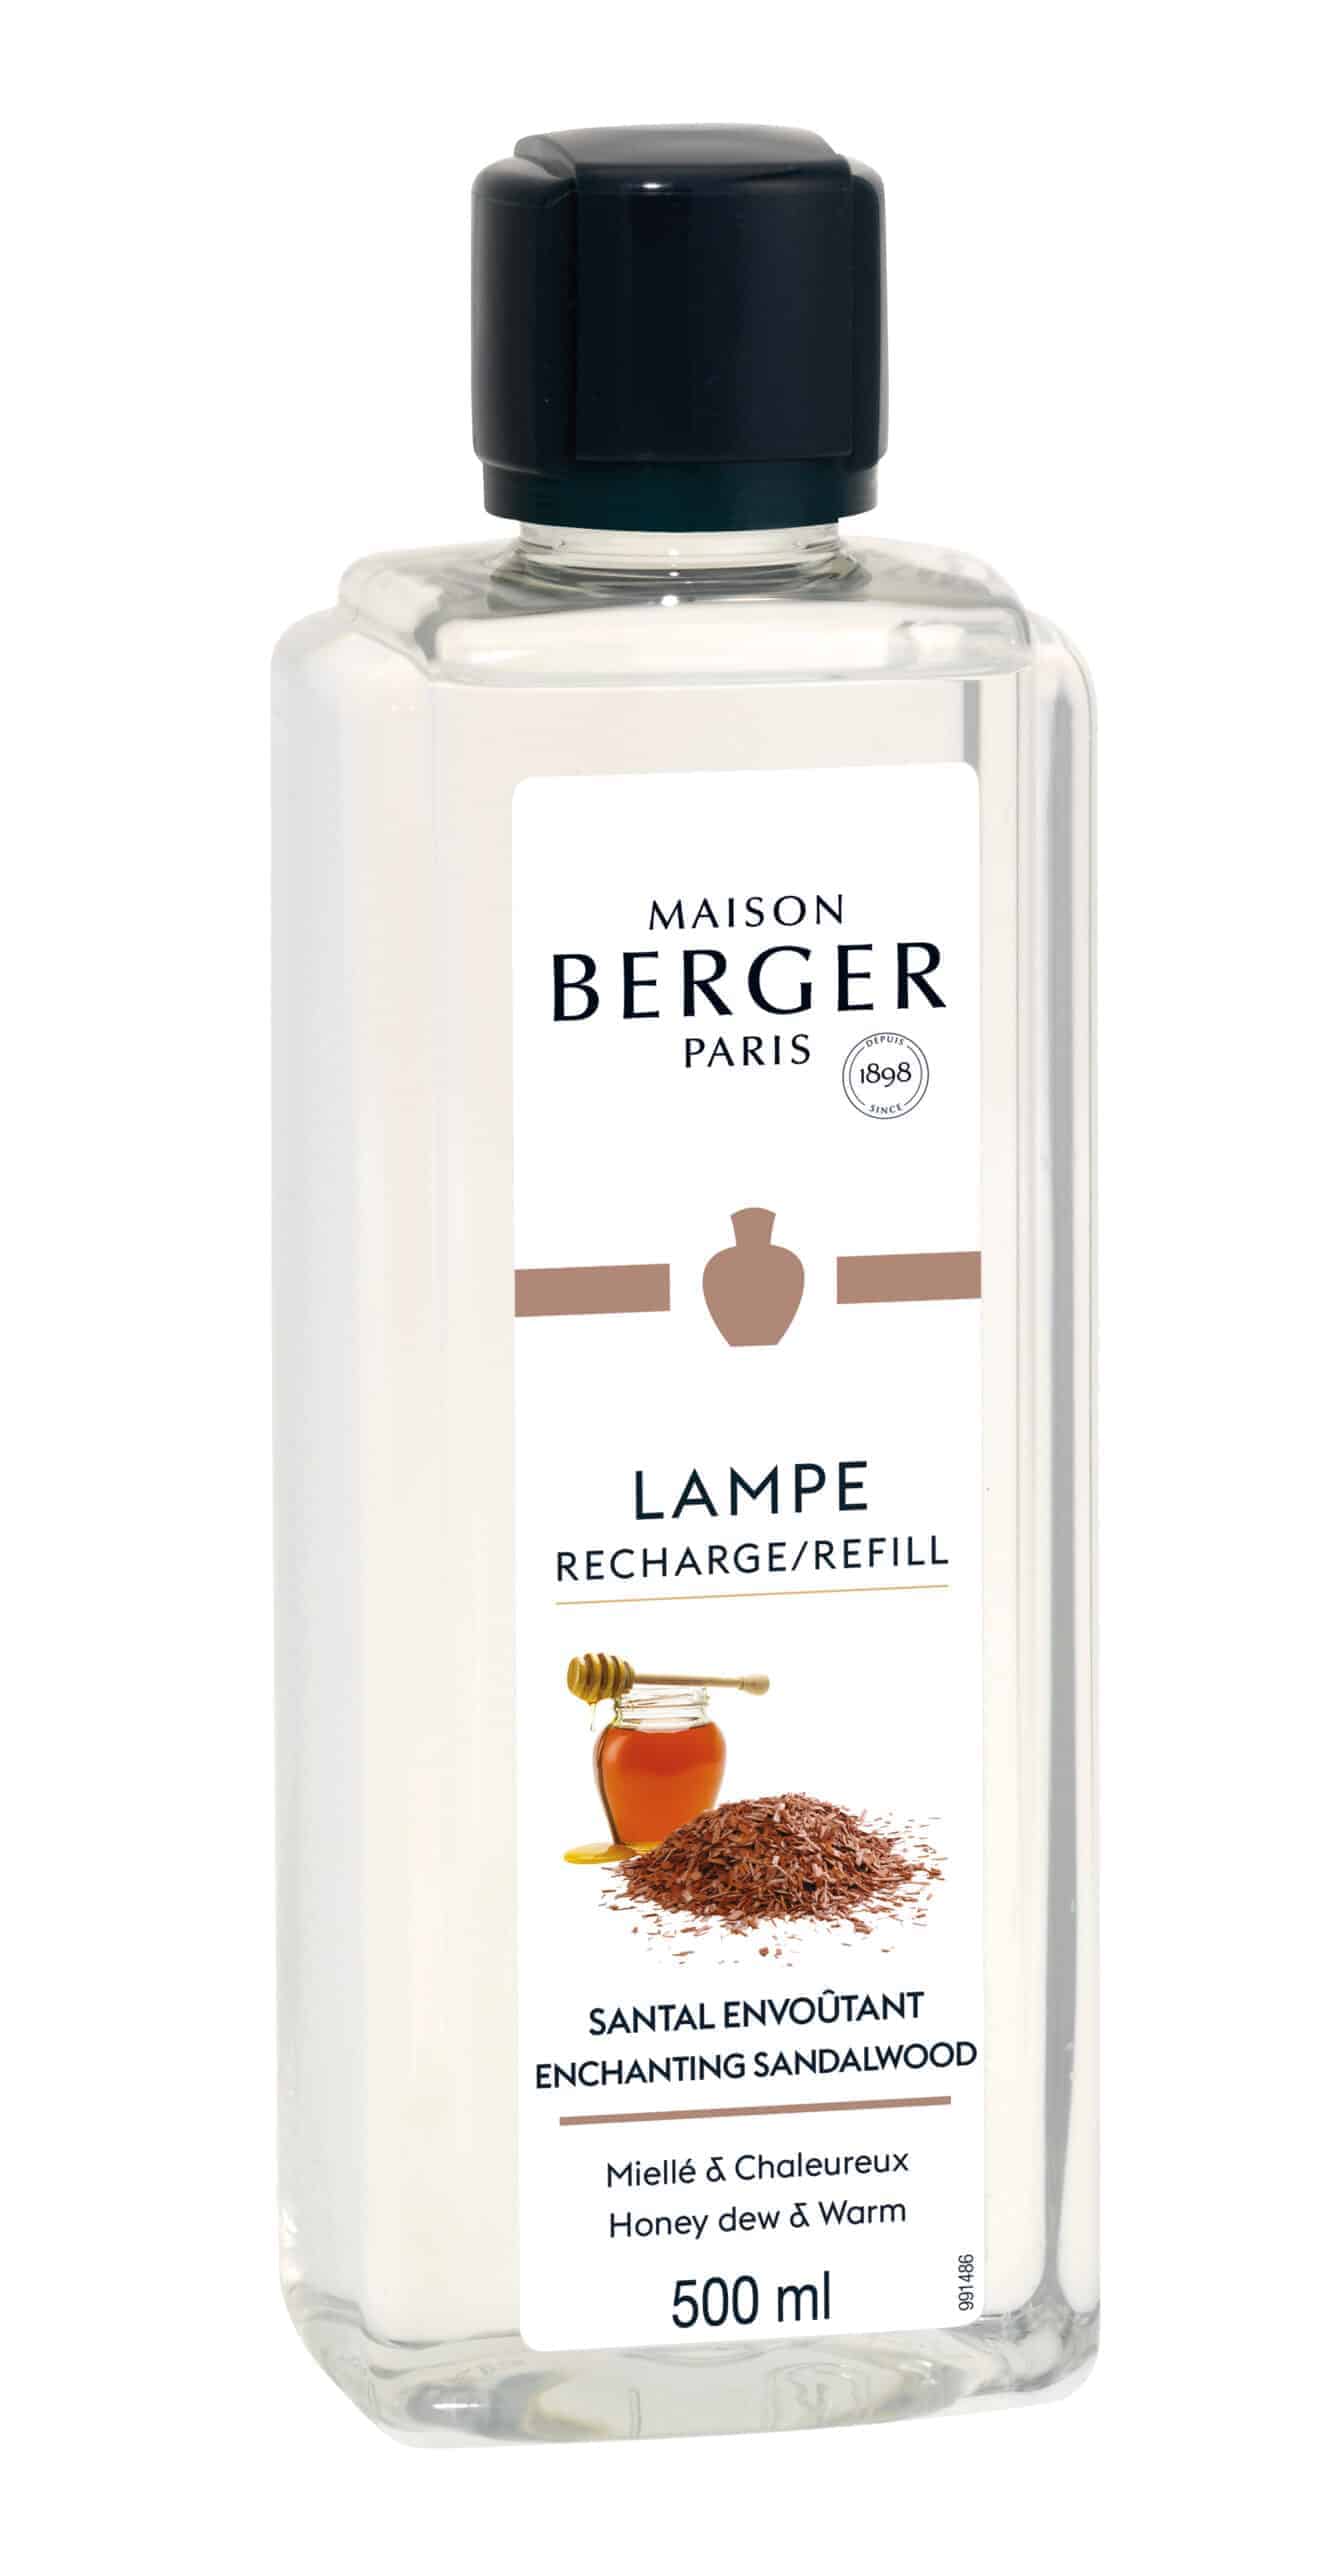 Maison Berger Paris - parfum Enchanting Sandalwood - 500 ml